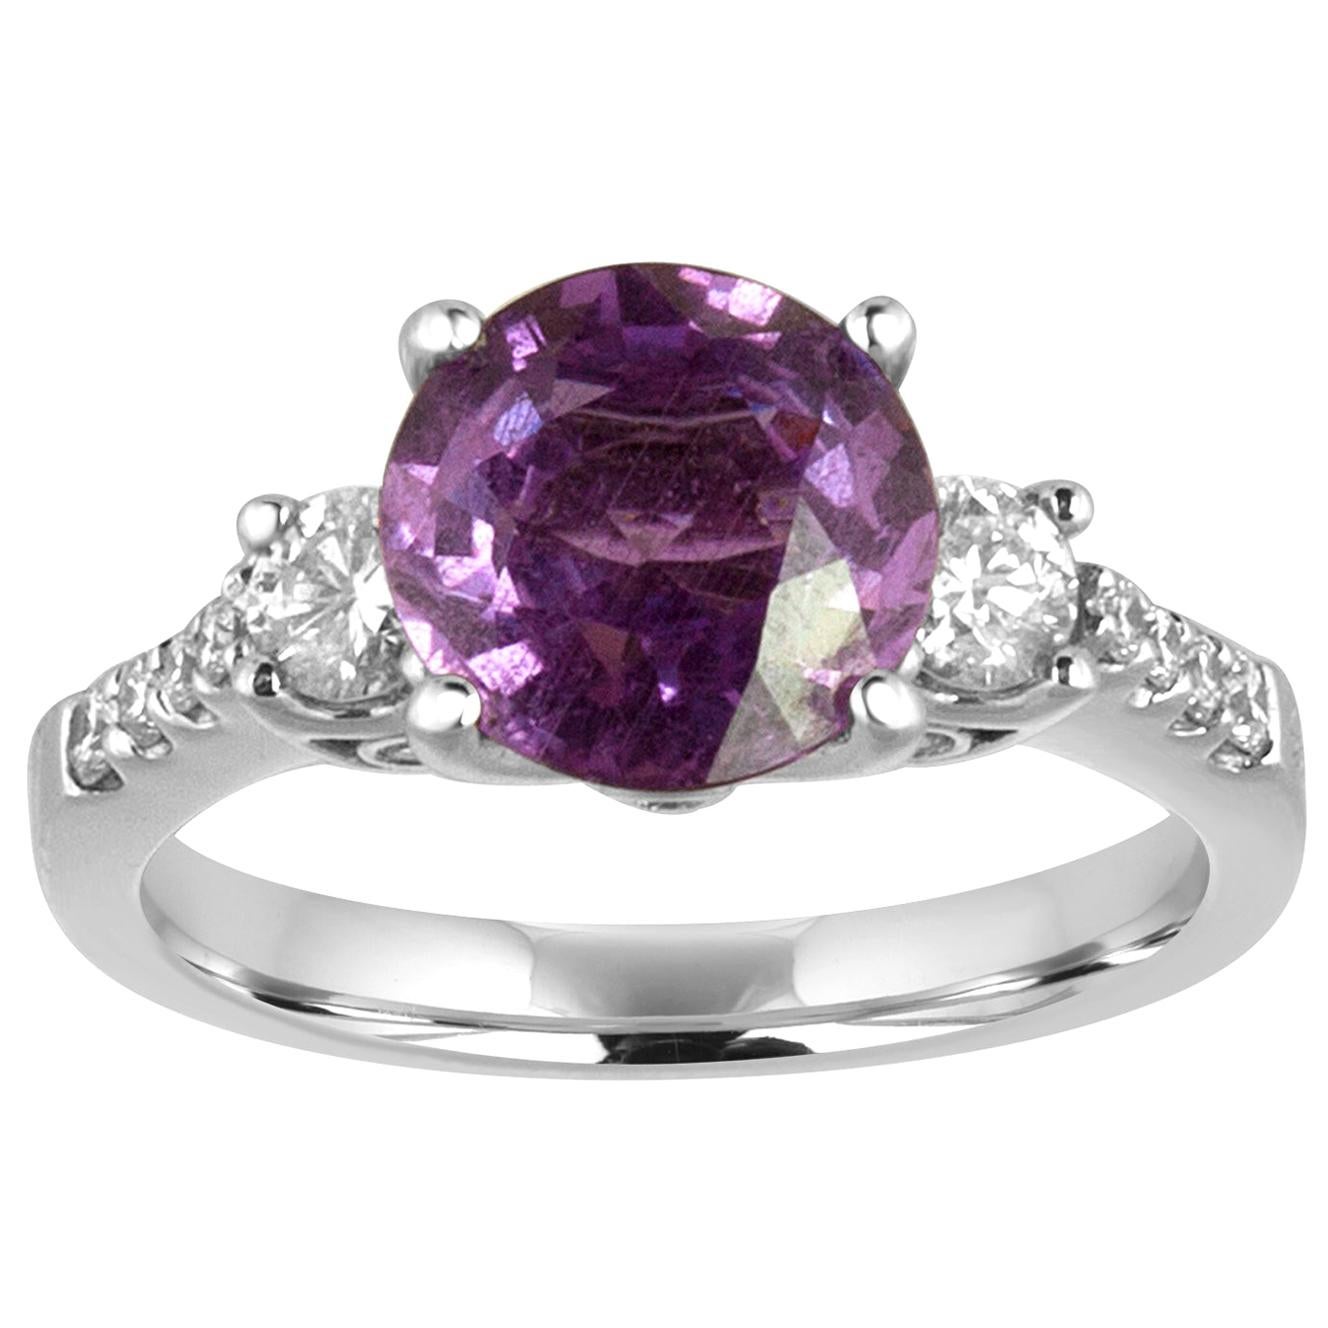 Certified No Heat 2.64 Carat Round Violet Sapphire Diamond Gold Ring